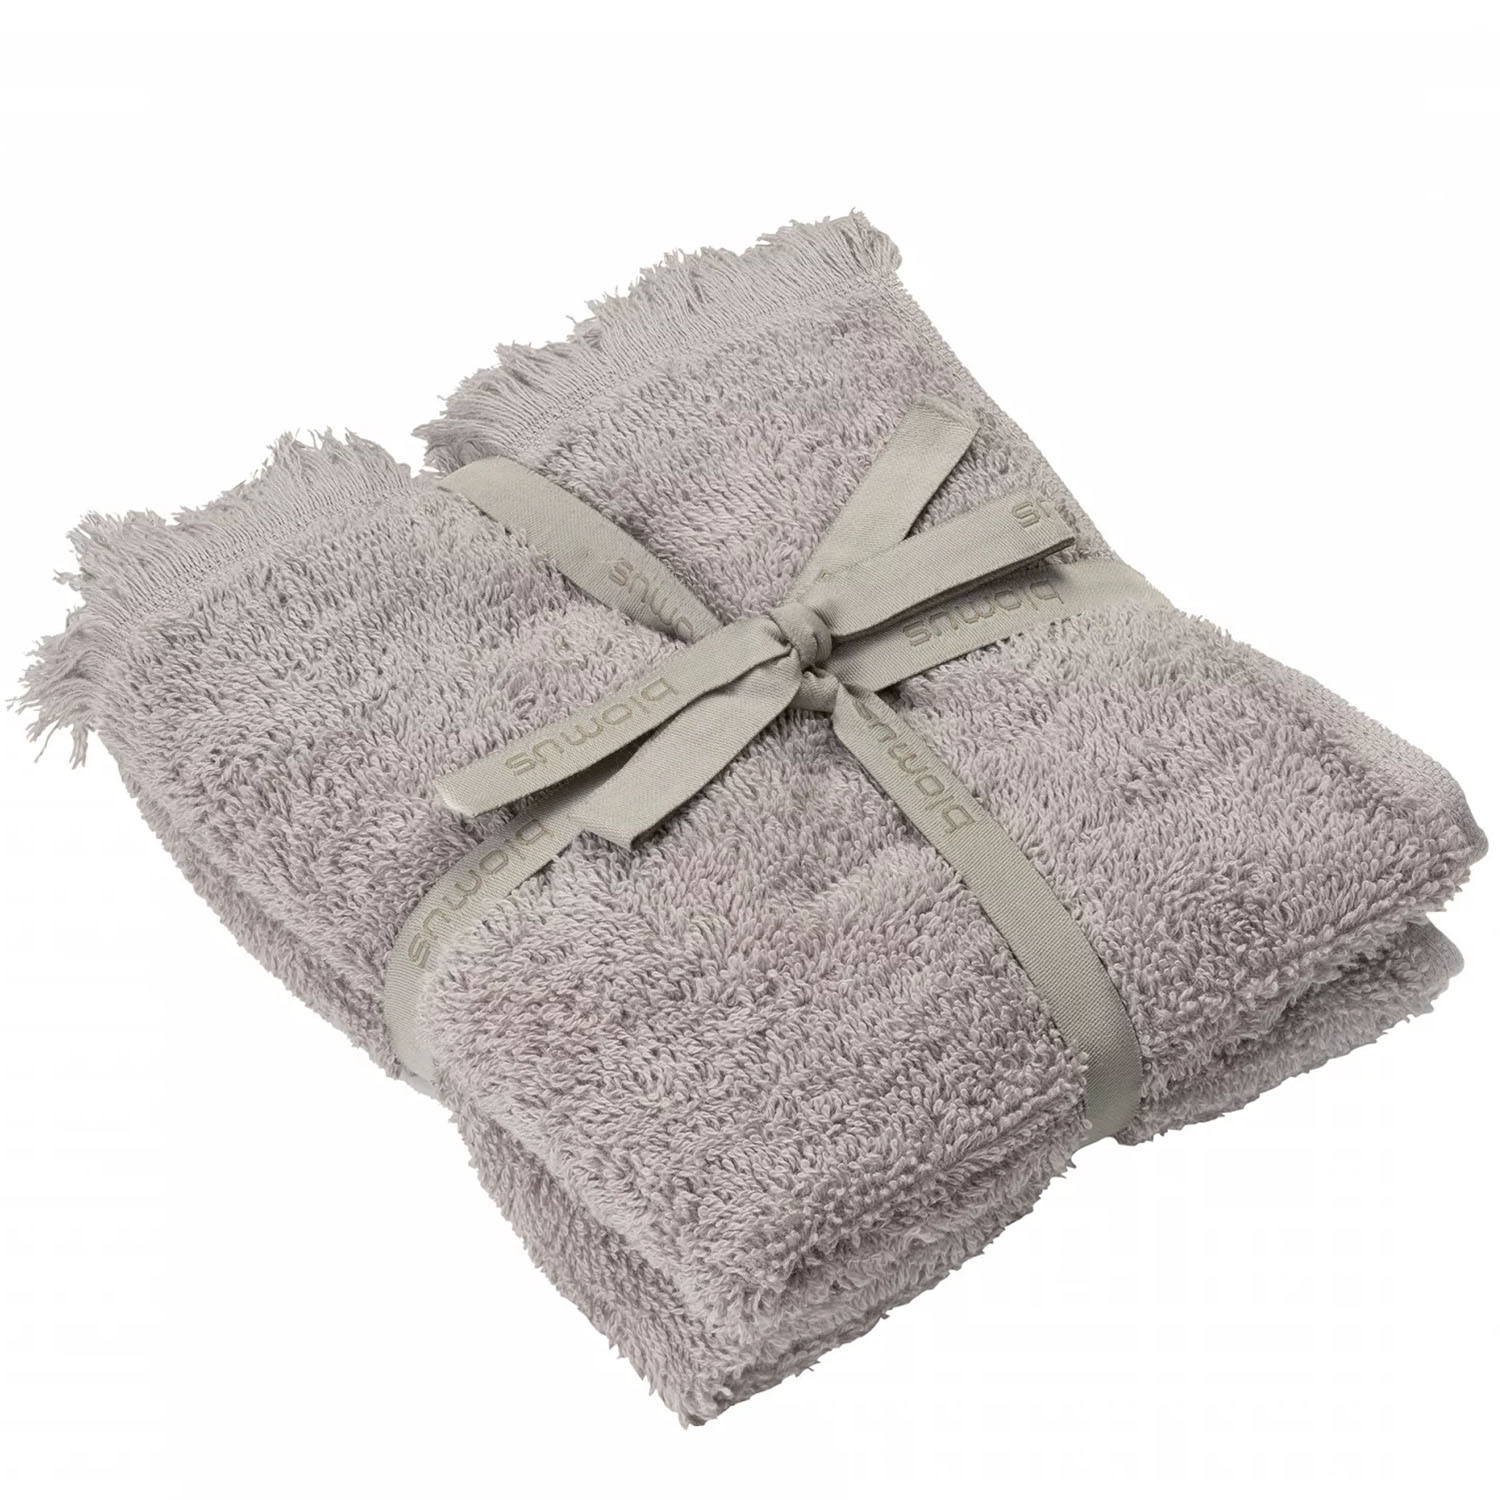 Blomus - Riva Sauna towel